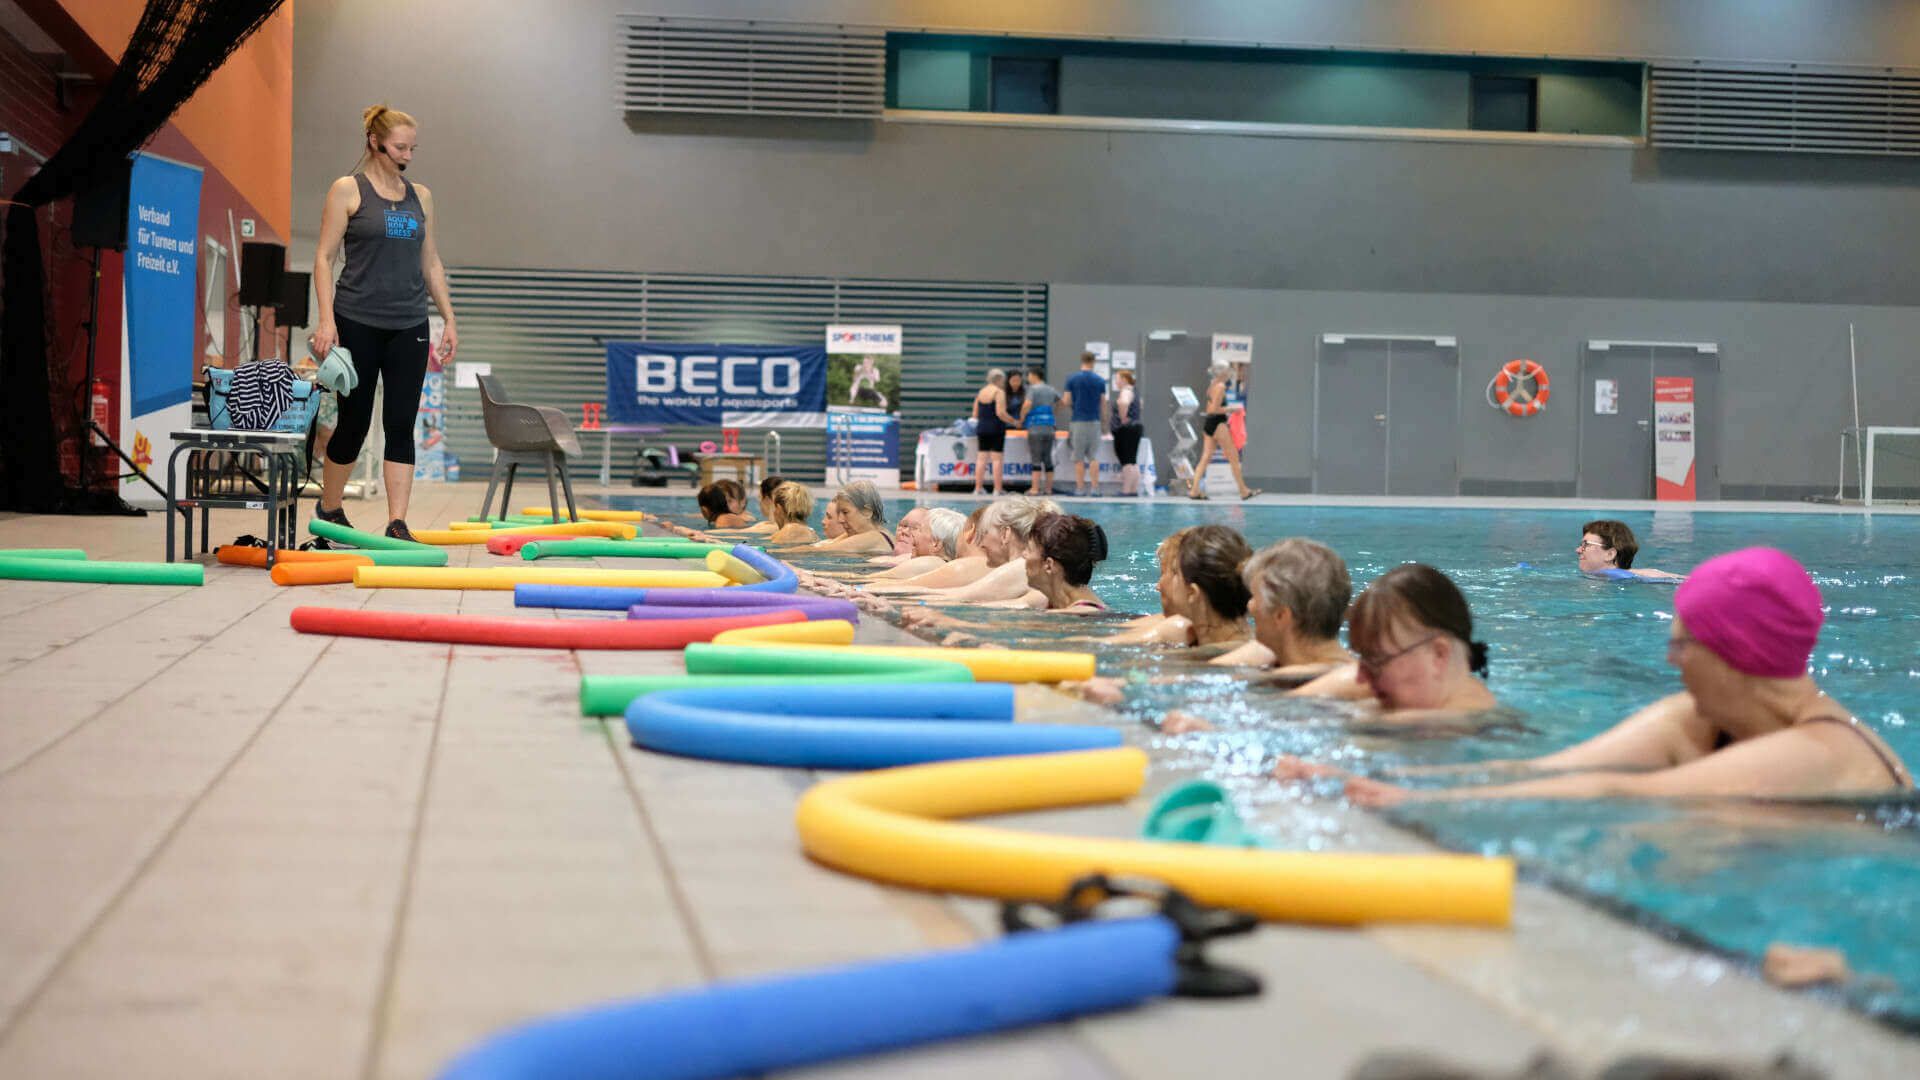 Aqua-Fitnessgruppe am Beckenrand, auf dem Boden liegen bunte Poolnudeln